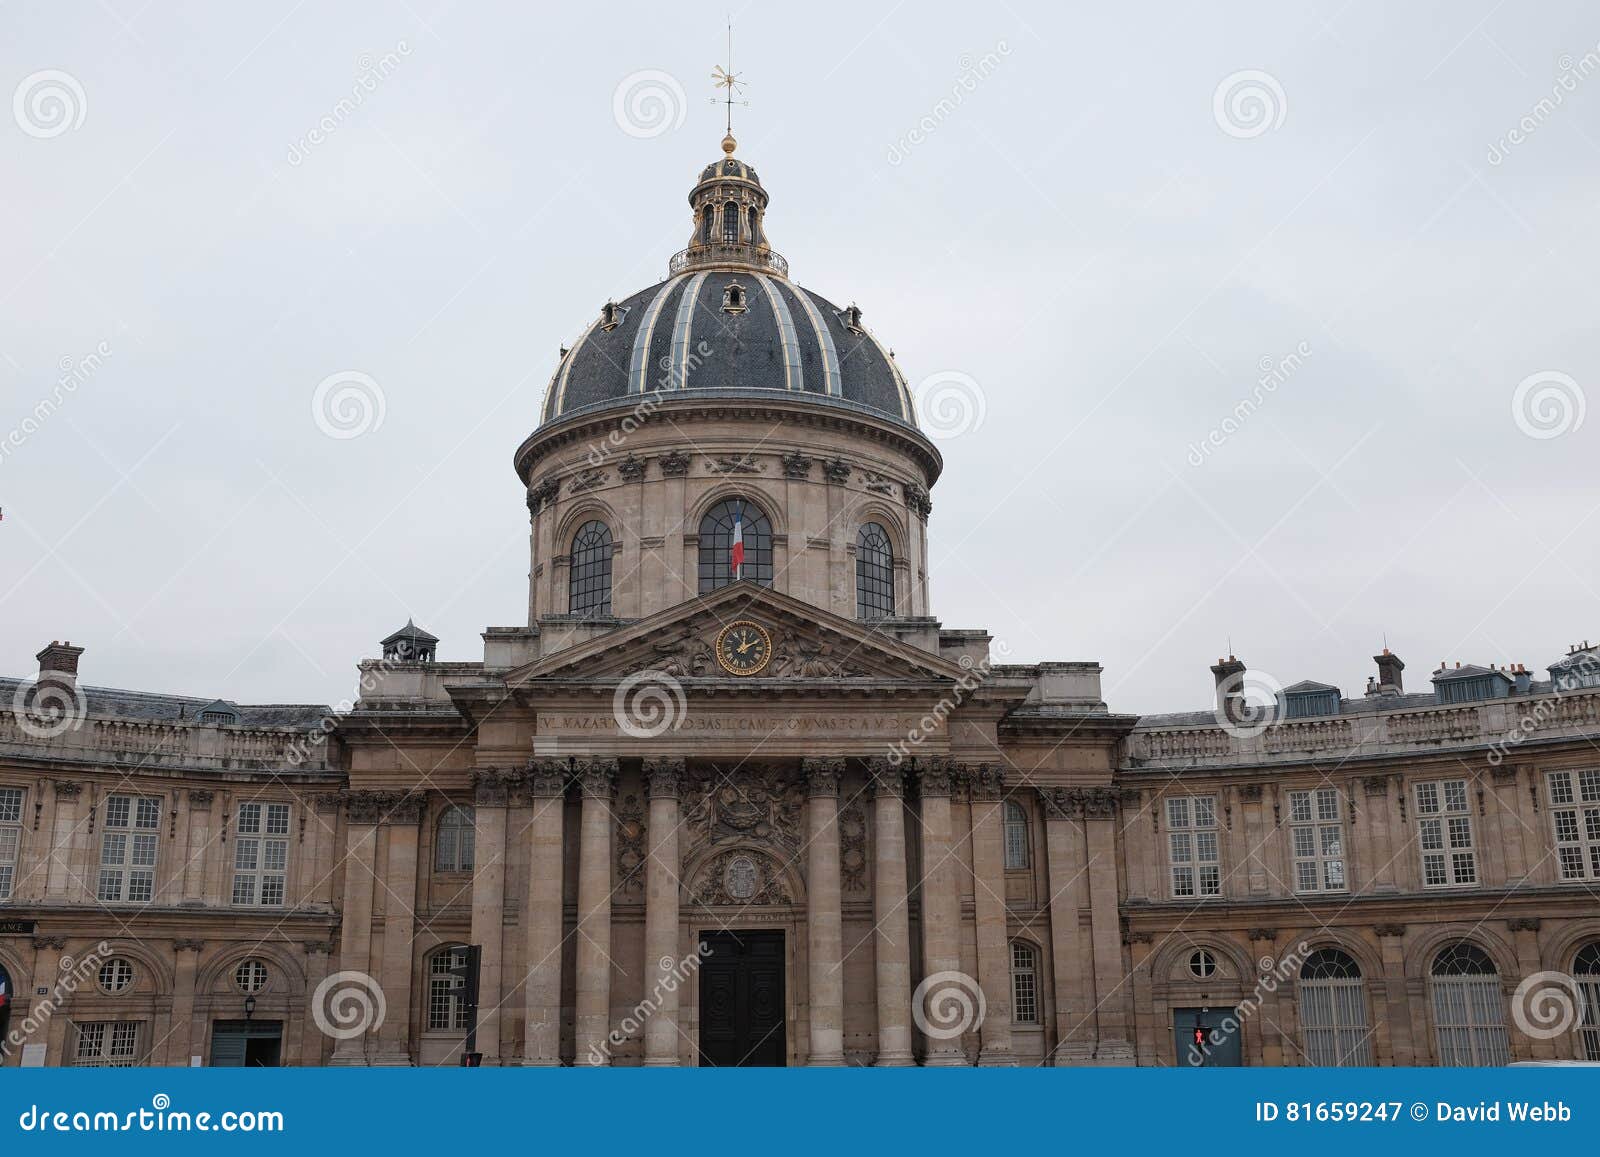 historic buildings in paris, france